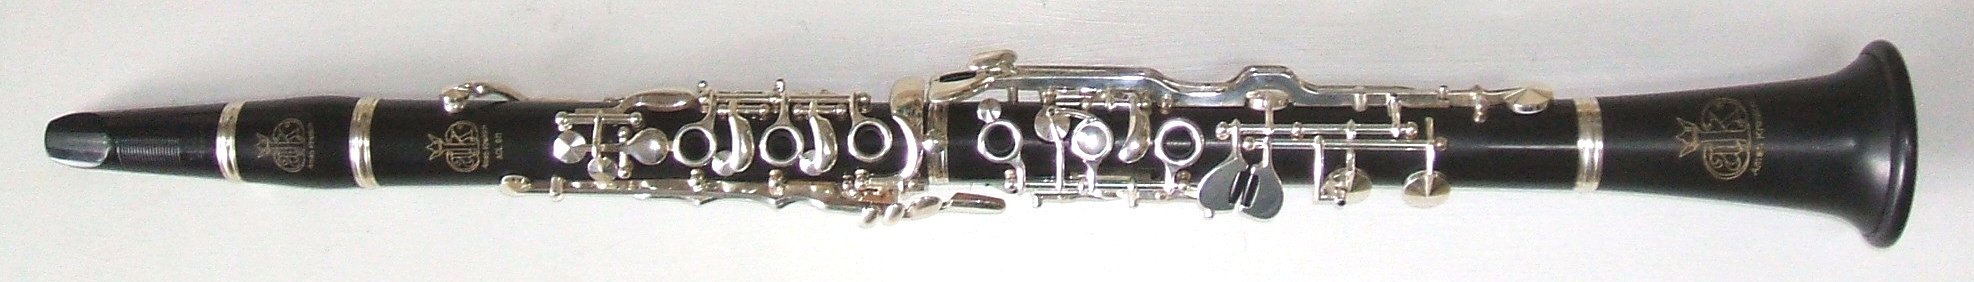 Amati clarinet serial numbers